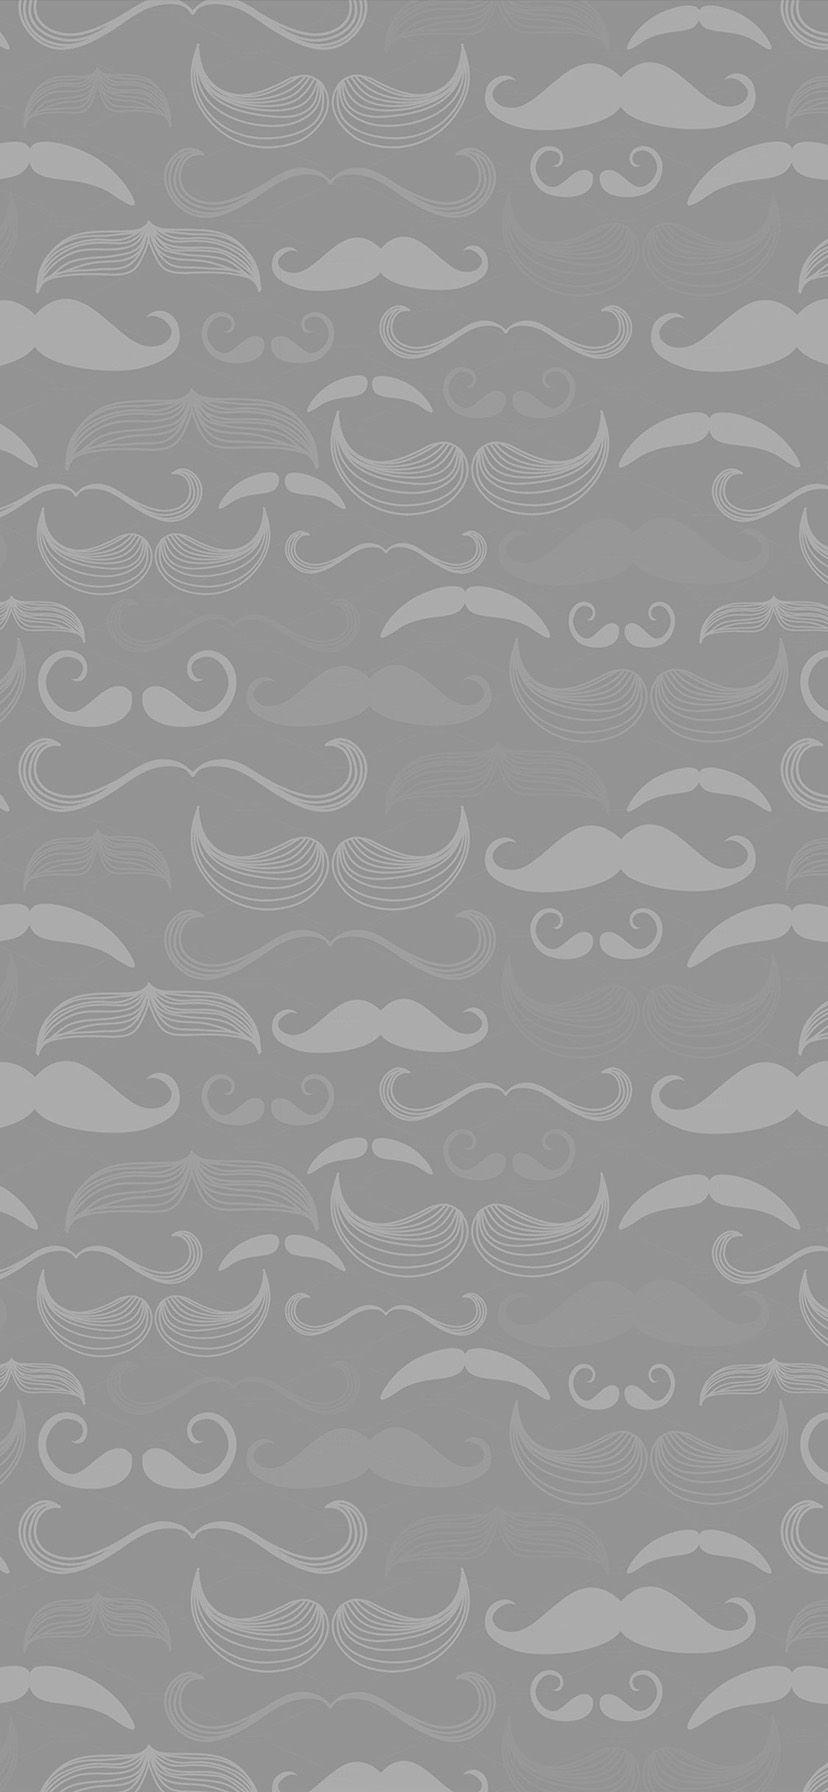 HD iPhone XR Wallpaper For ve73 hipster moustache cute light hazy